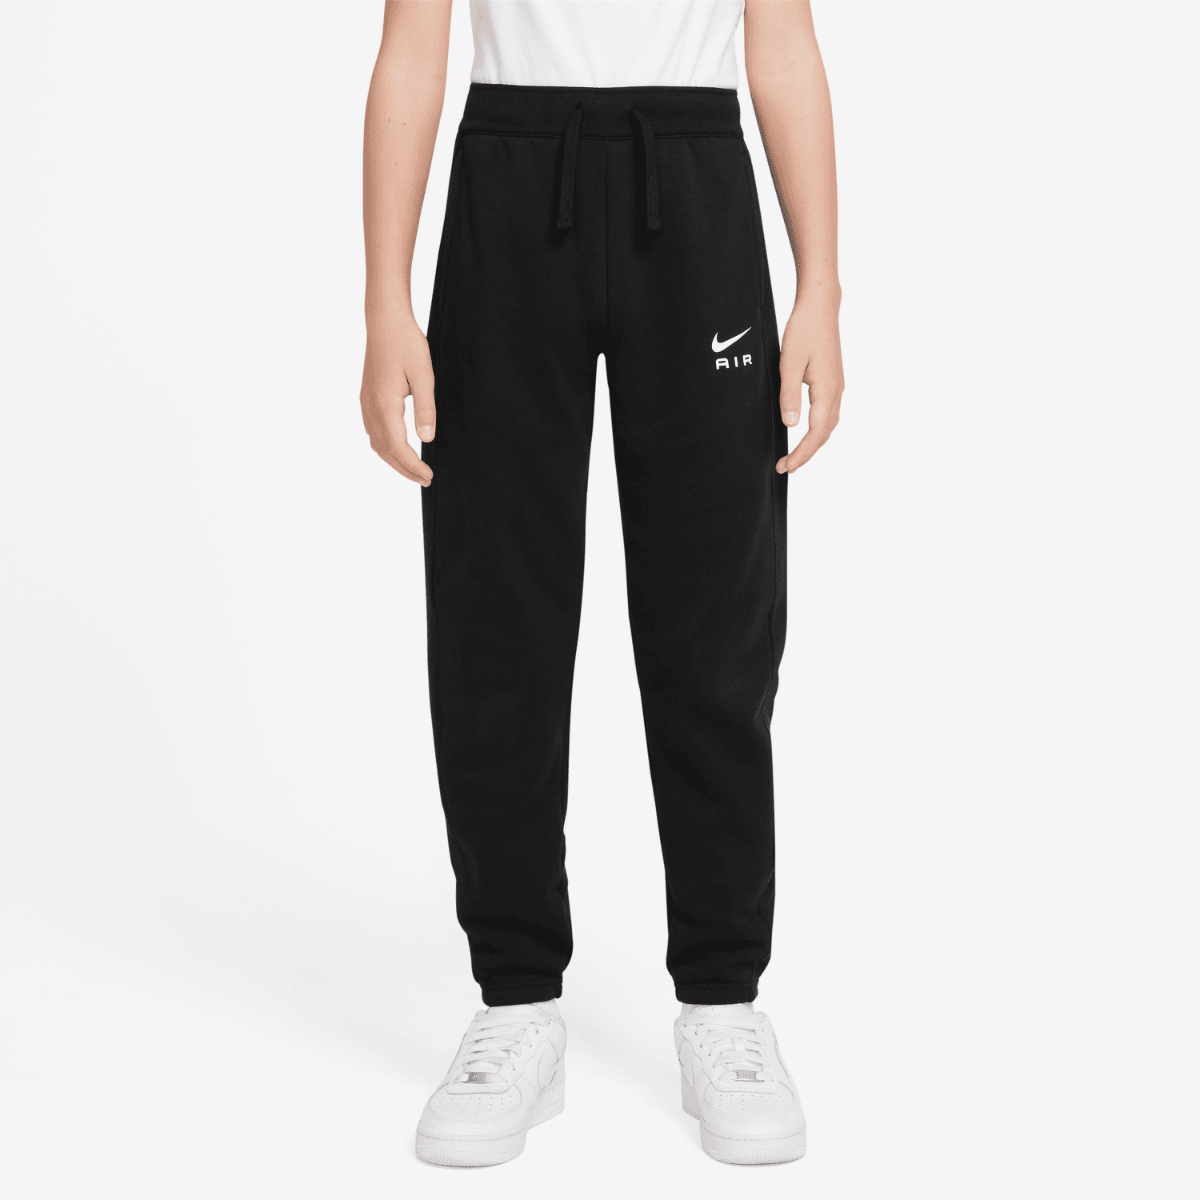 Pantaloni Nike Air Junior - Bianco/Nero